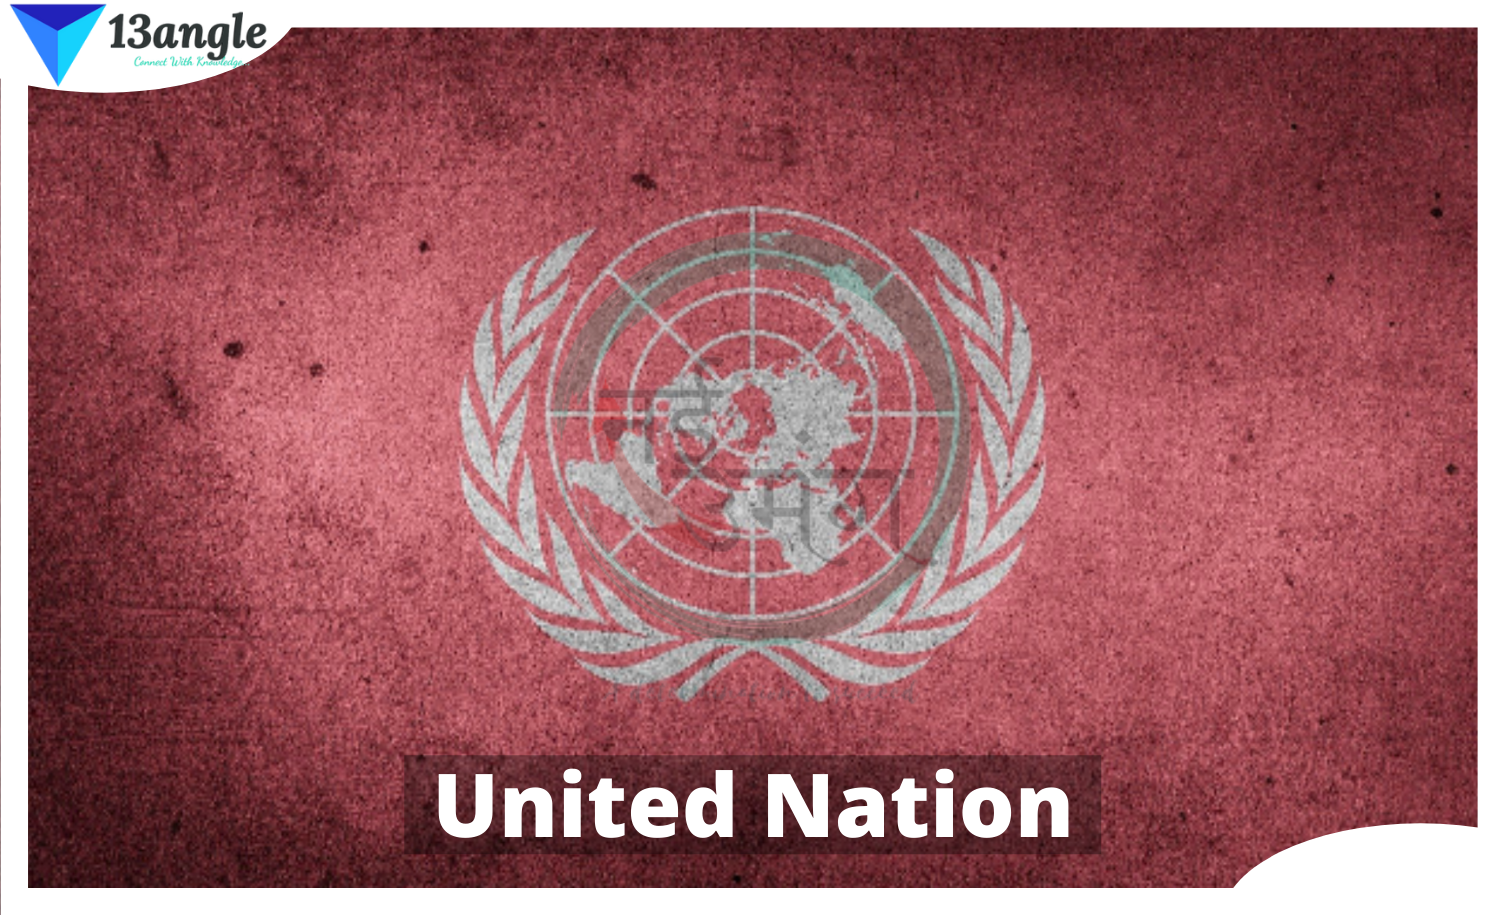 United Nation- 13angle.com